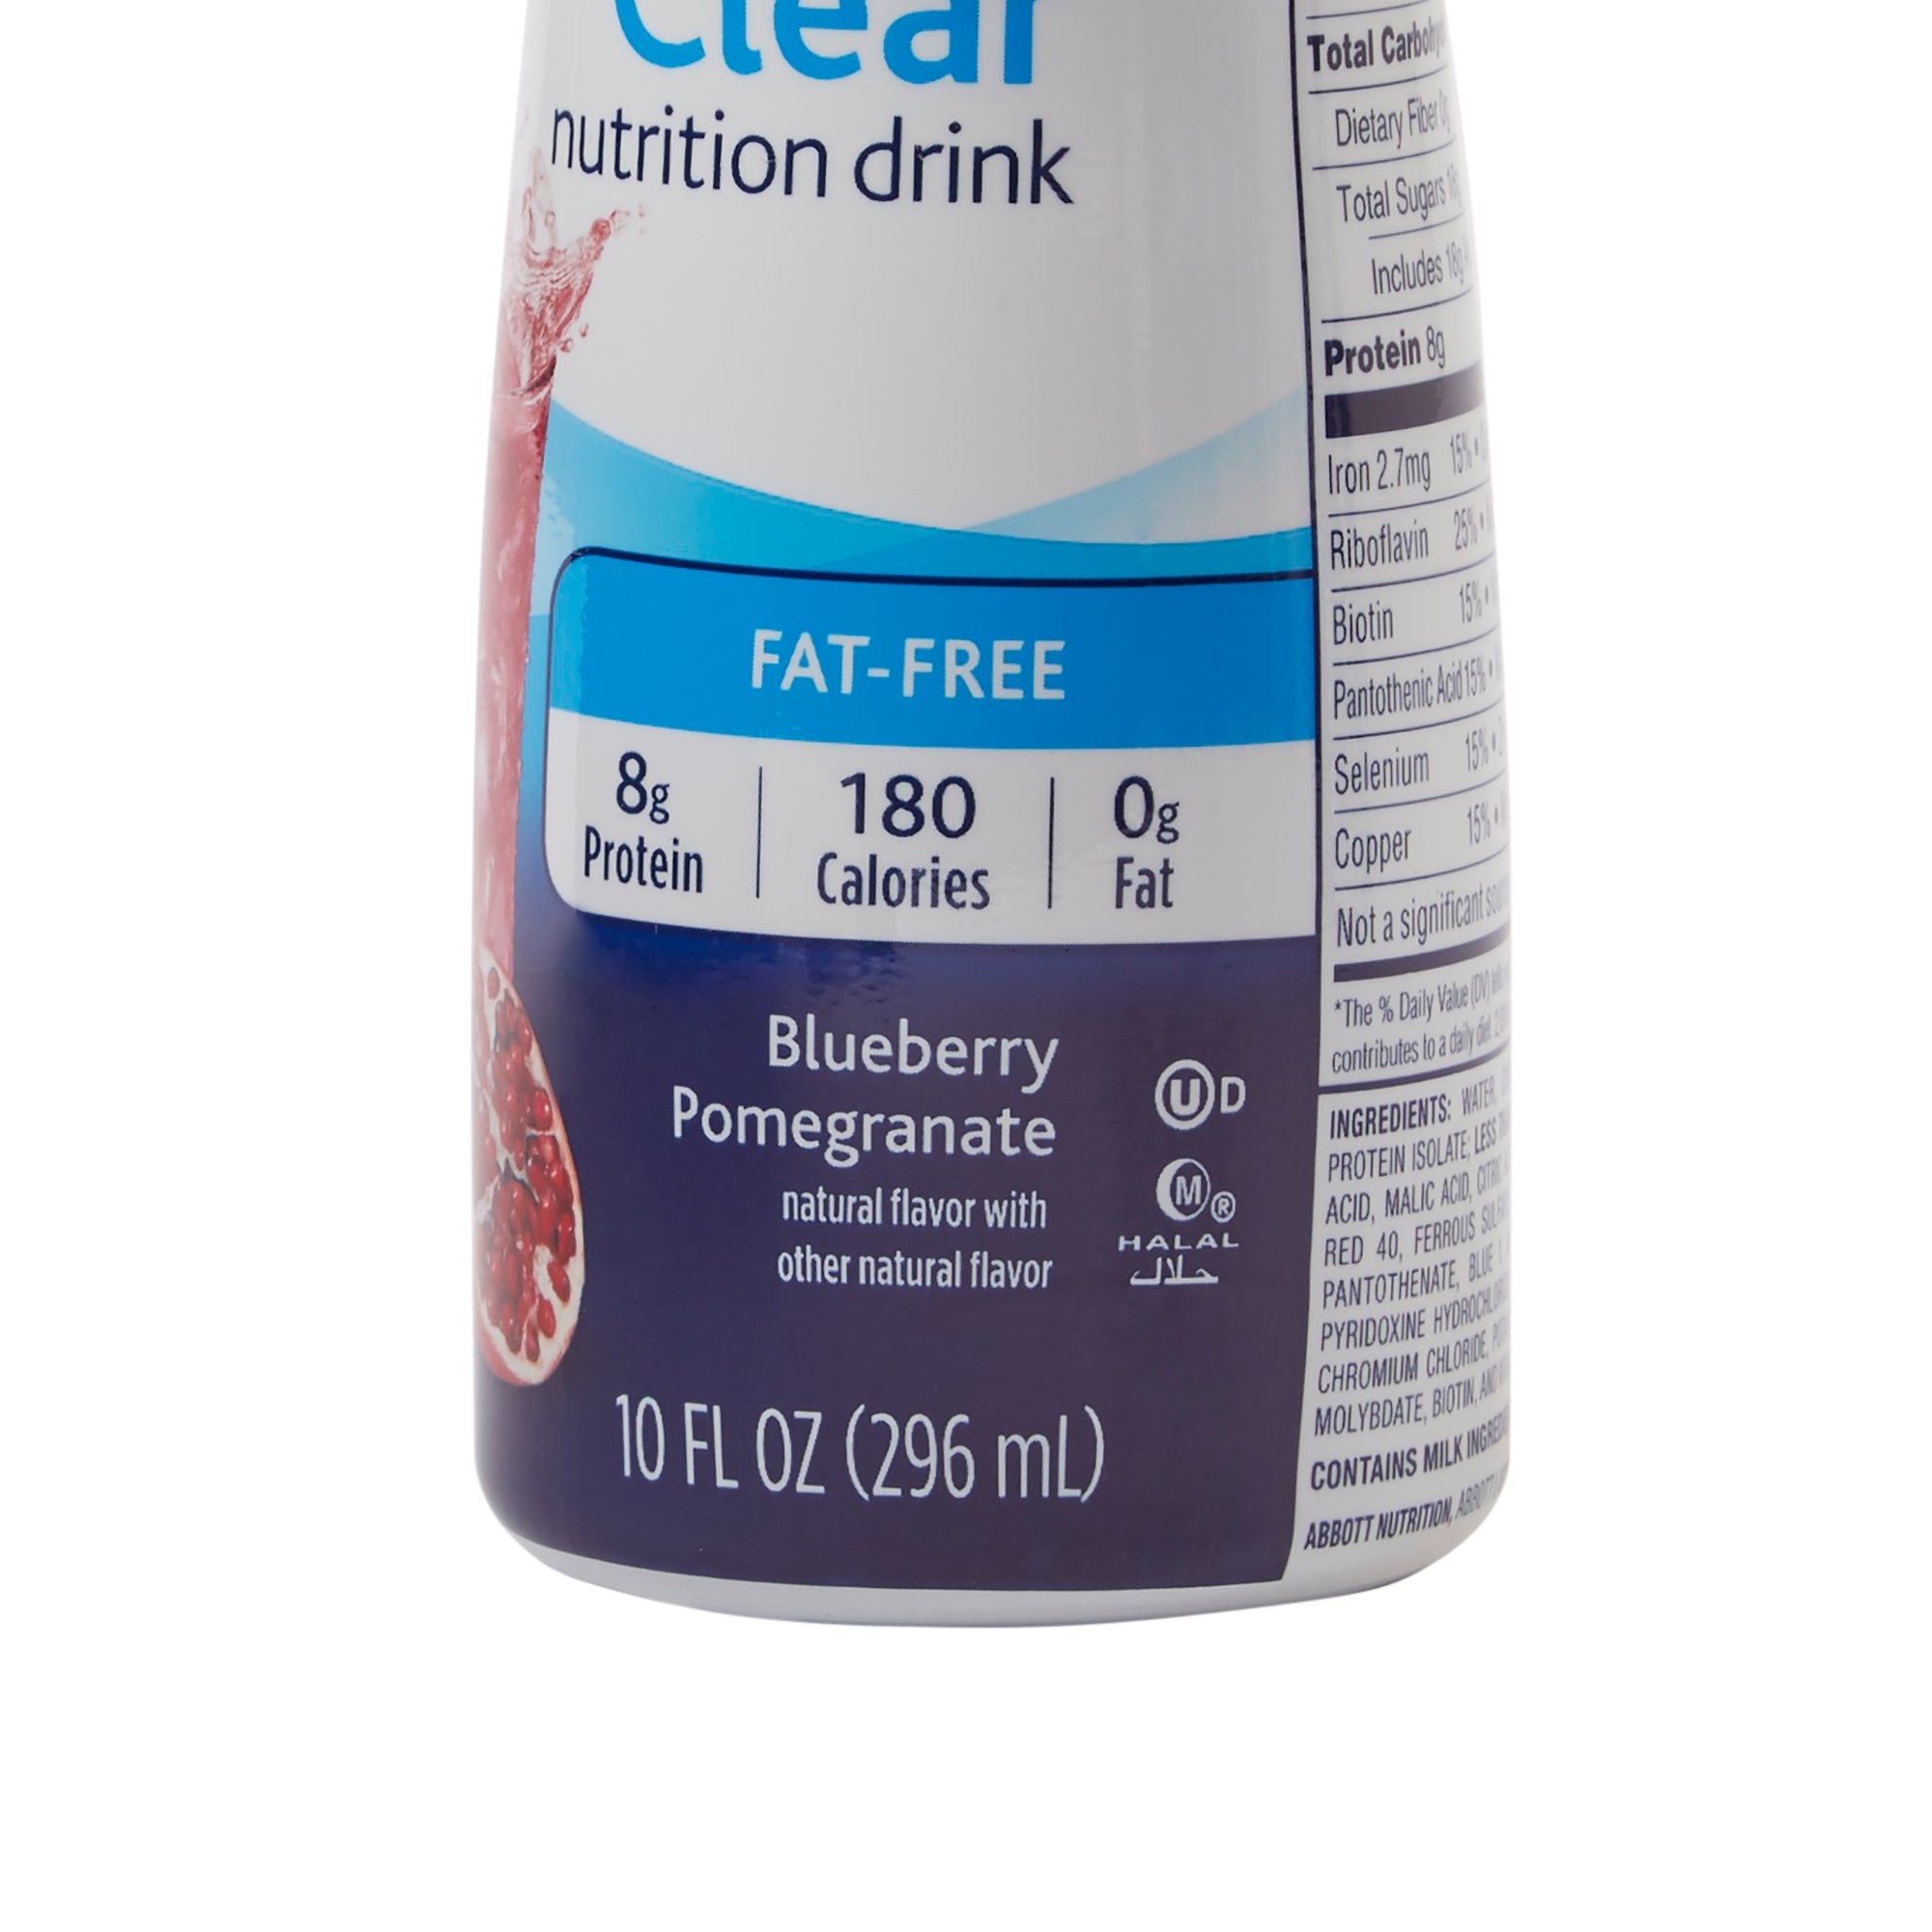 Ensure® Clear Blueberry Pomegranate Nutrition Liquid - 10oz (4 Pack)